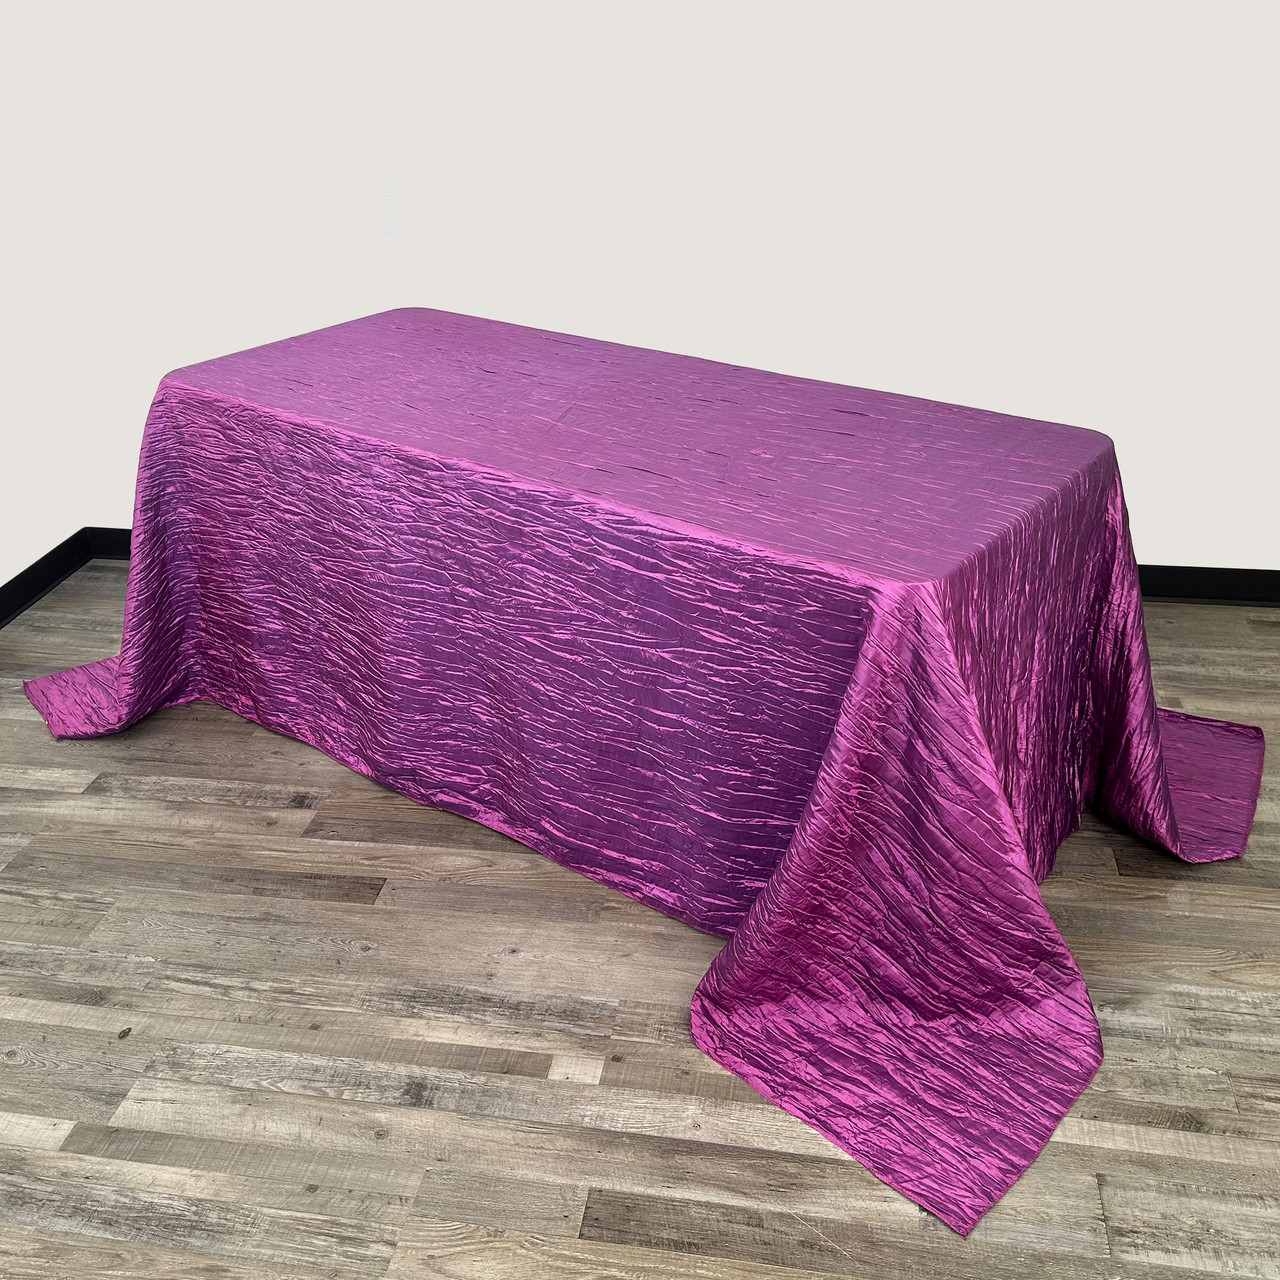 90 x 156 Inch Rectangular Crinkle Taffeta Tablecloth Purple - Your Chair  Covers Inc.